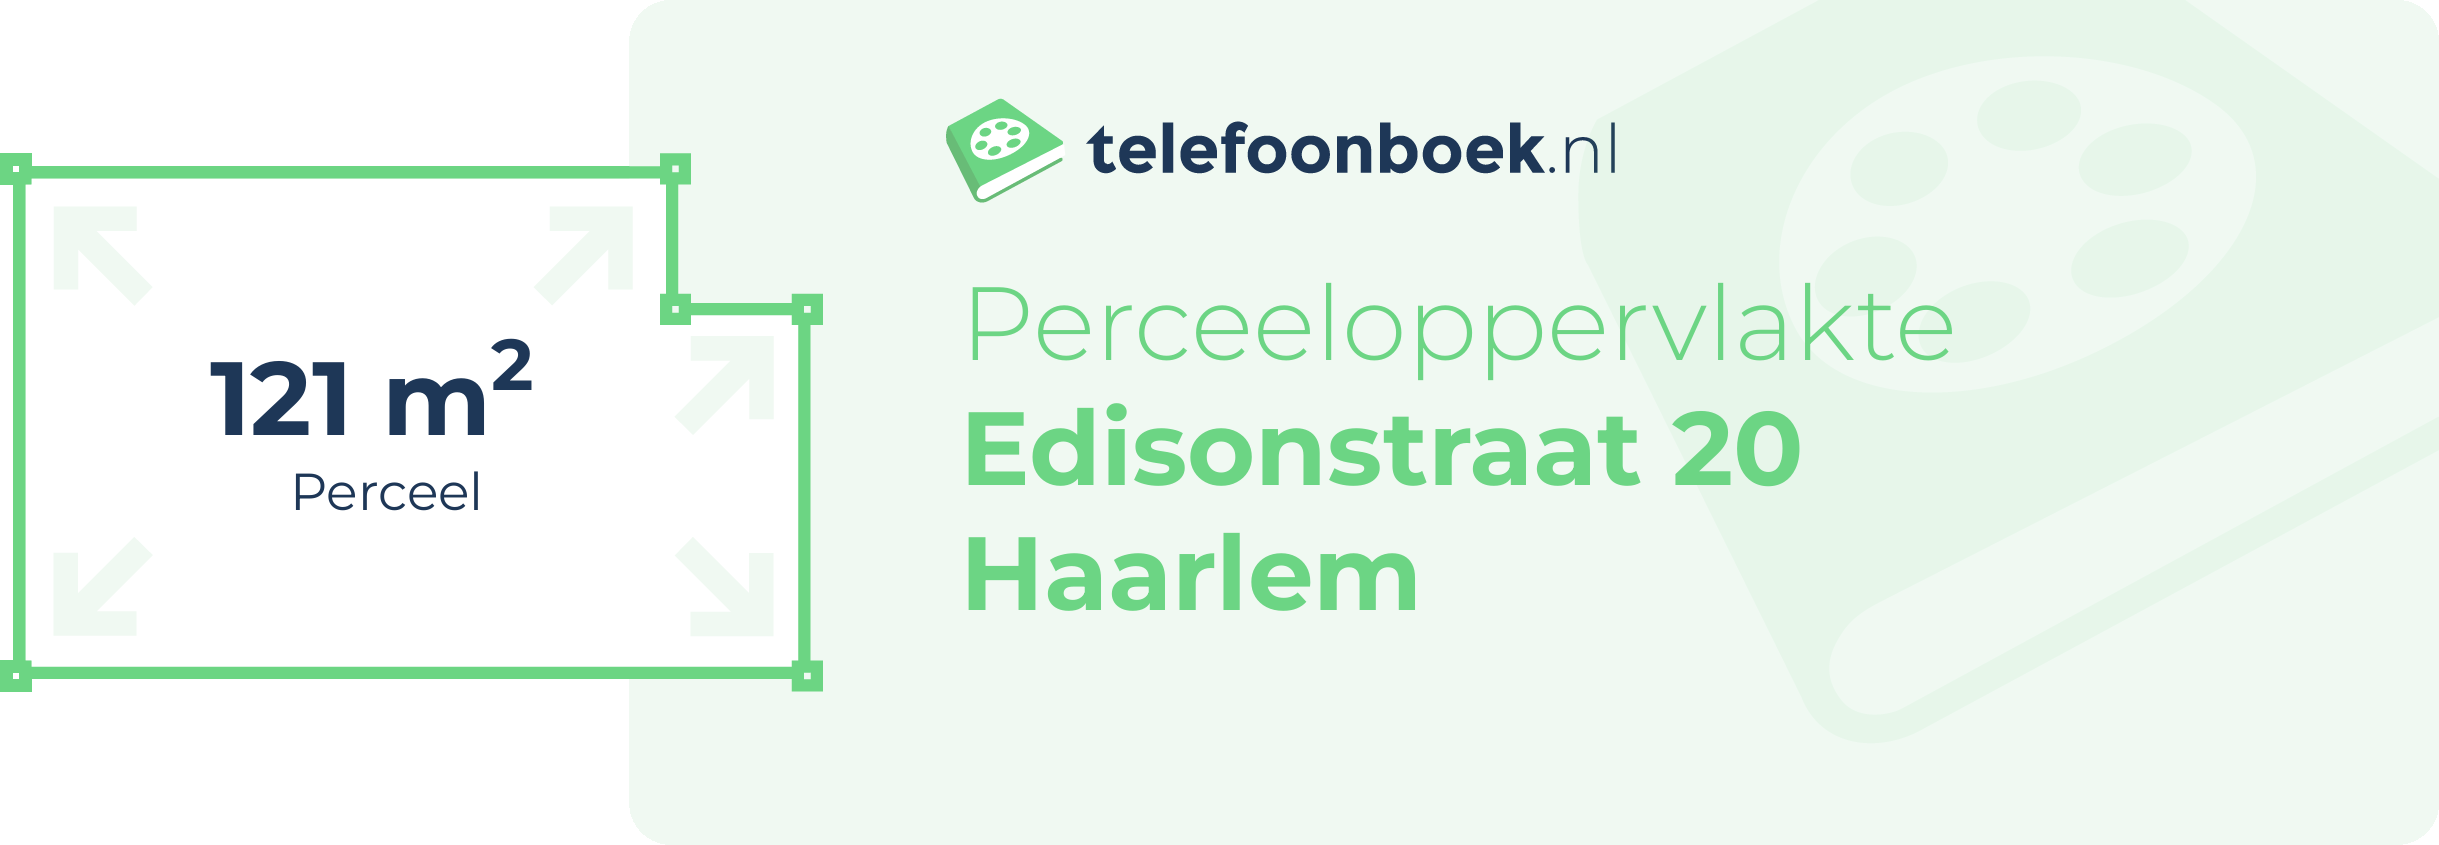 Perceeloppervlakte Edisonstraat 20 Haarlem